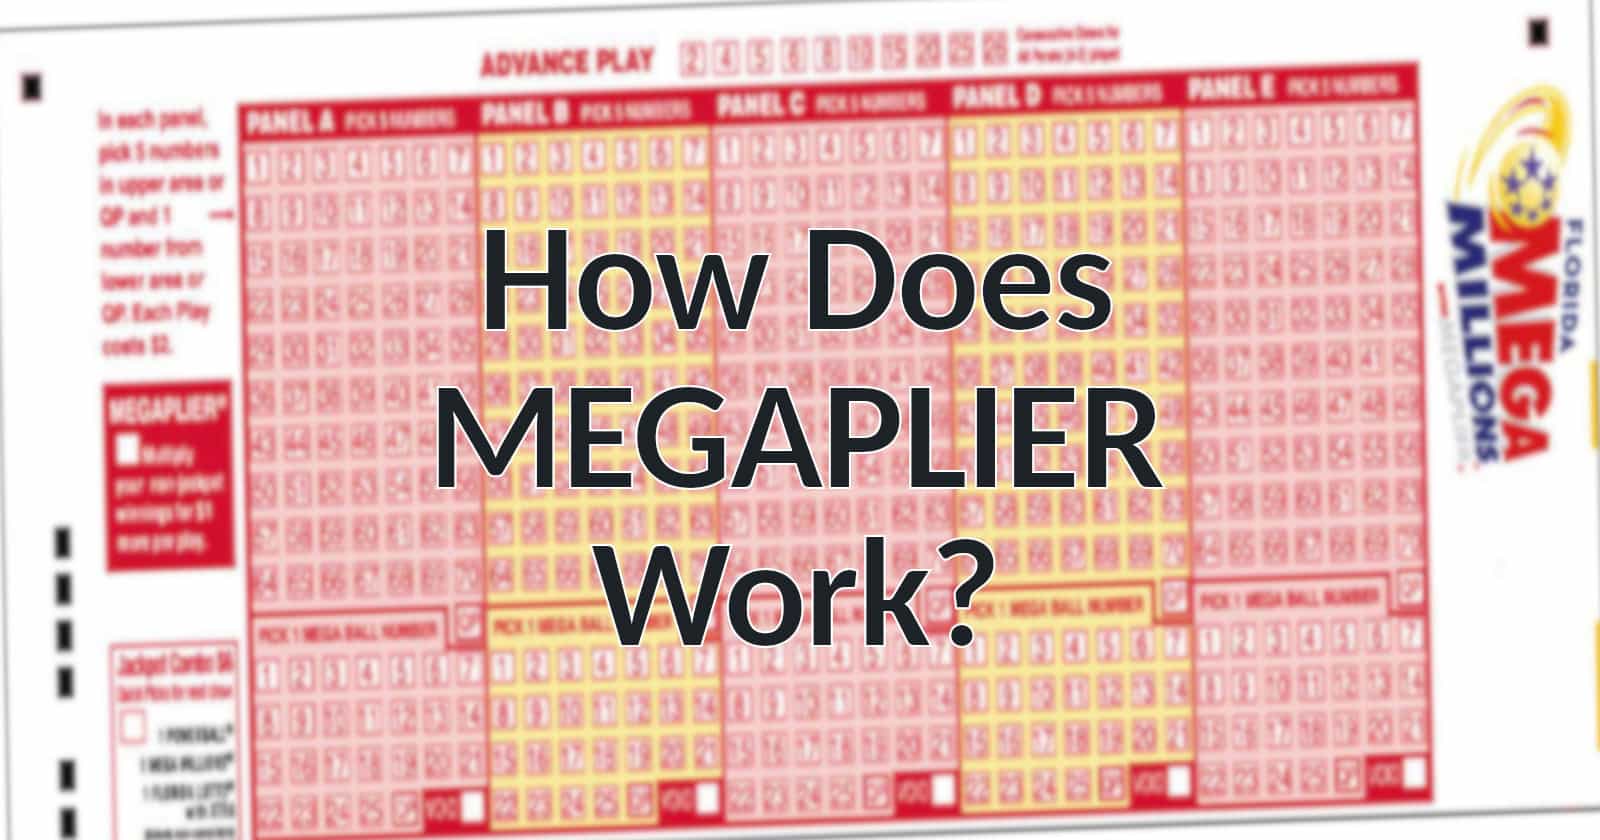 How does Megaplier work